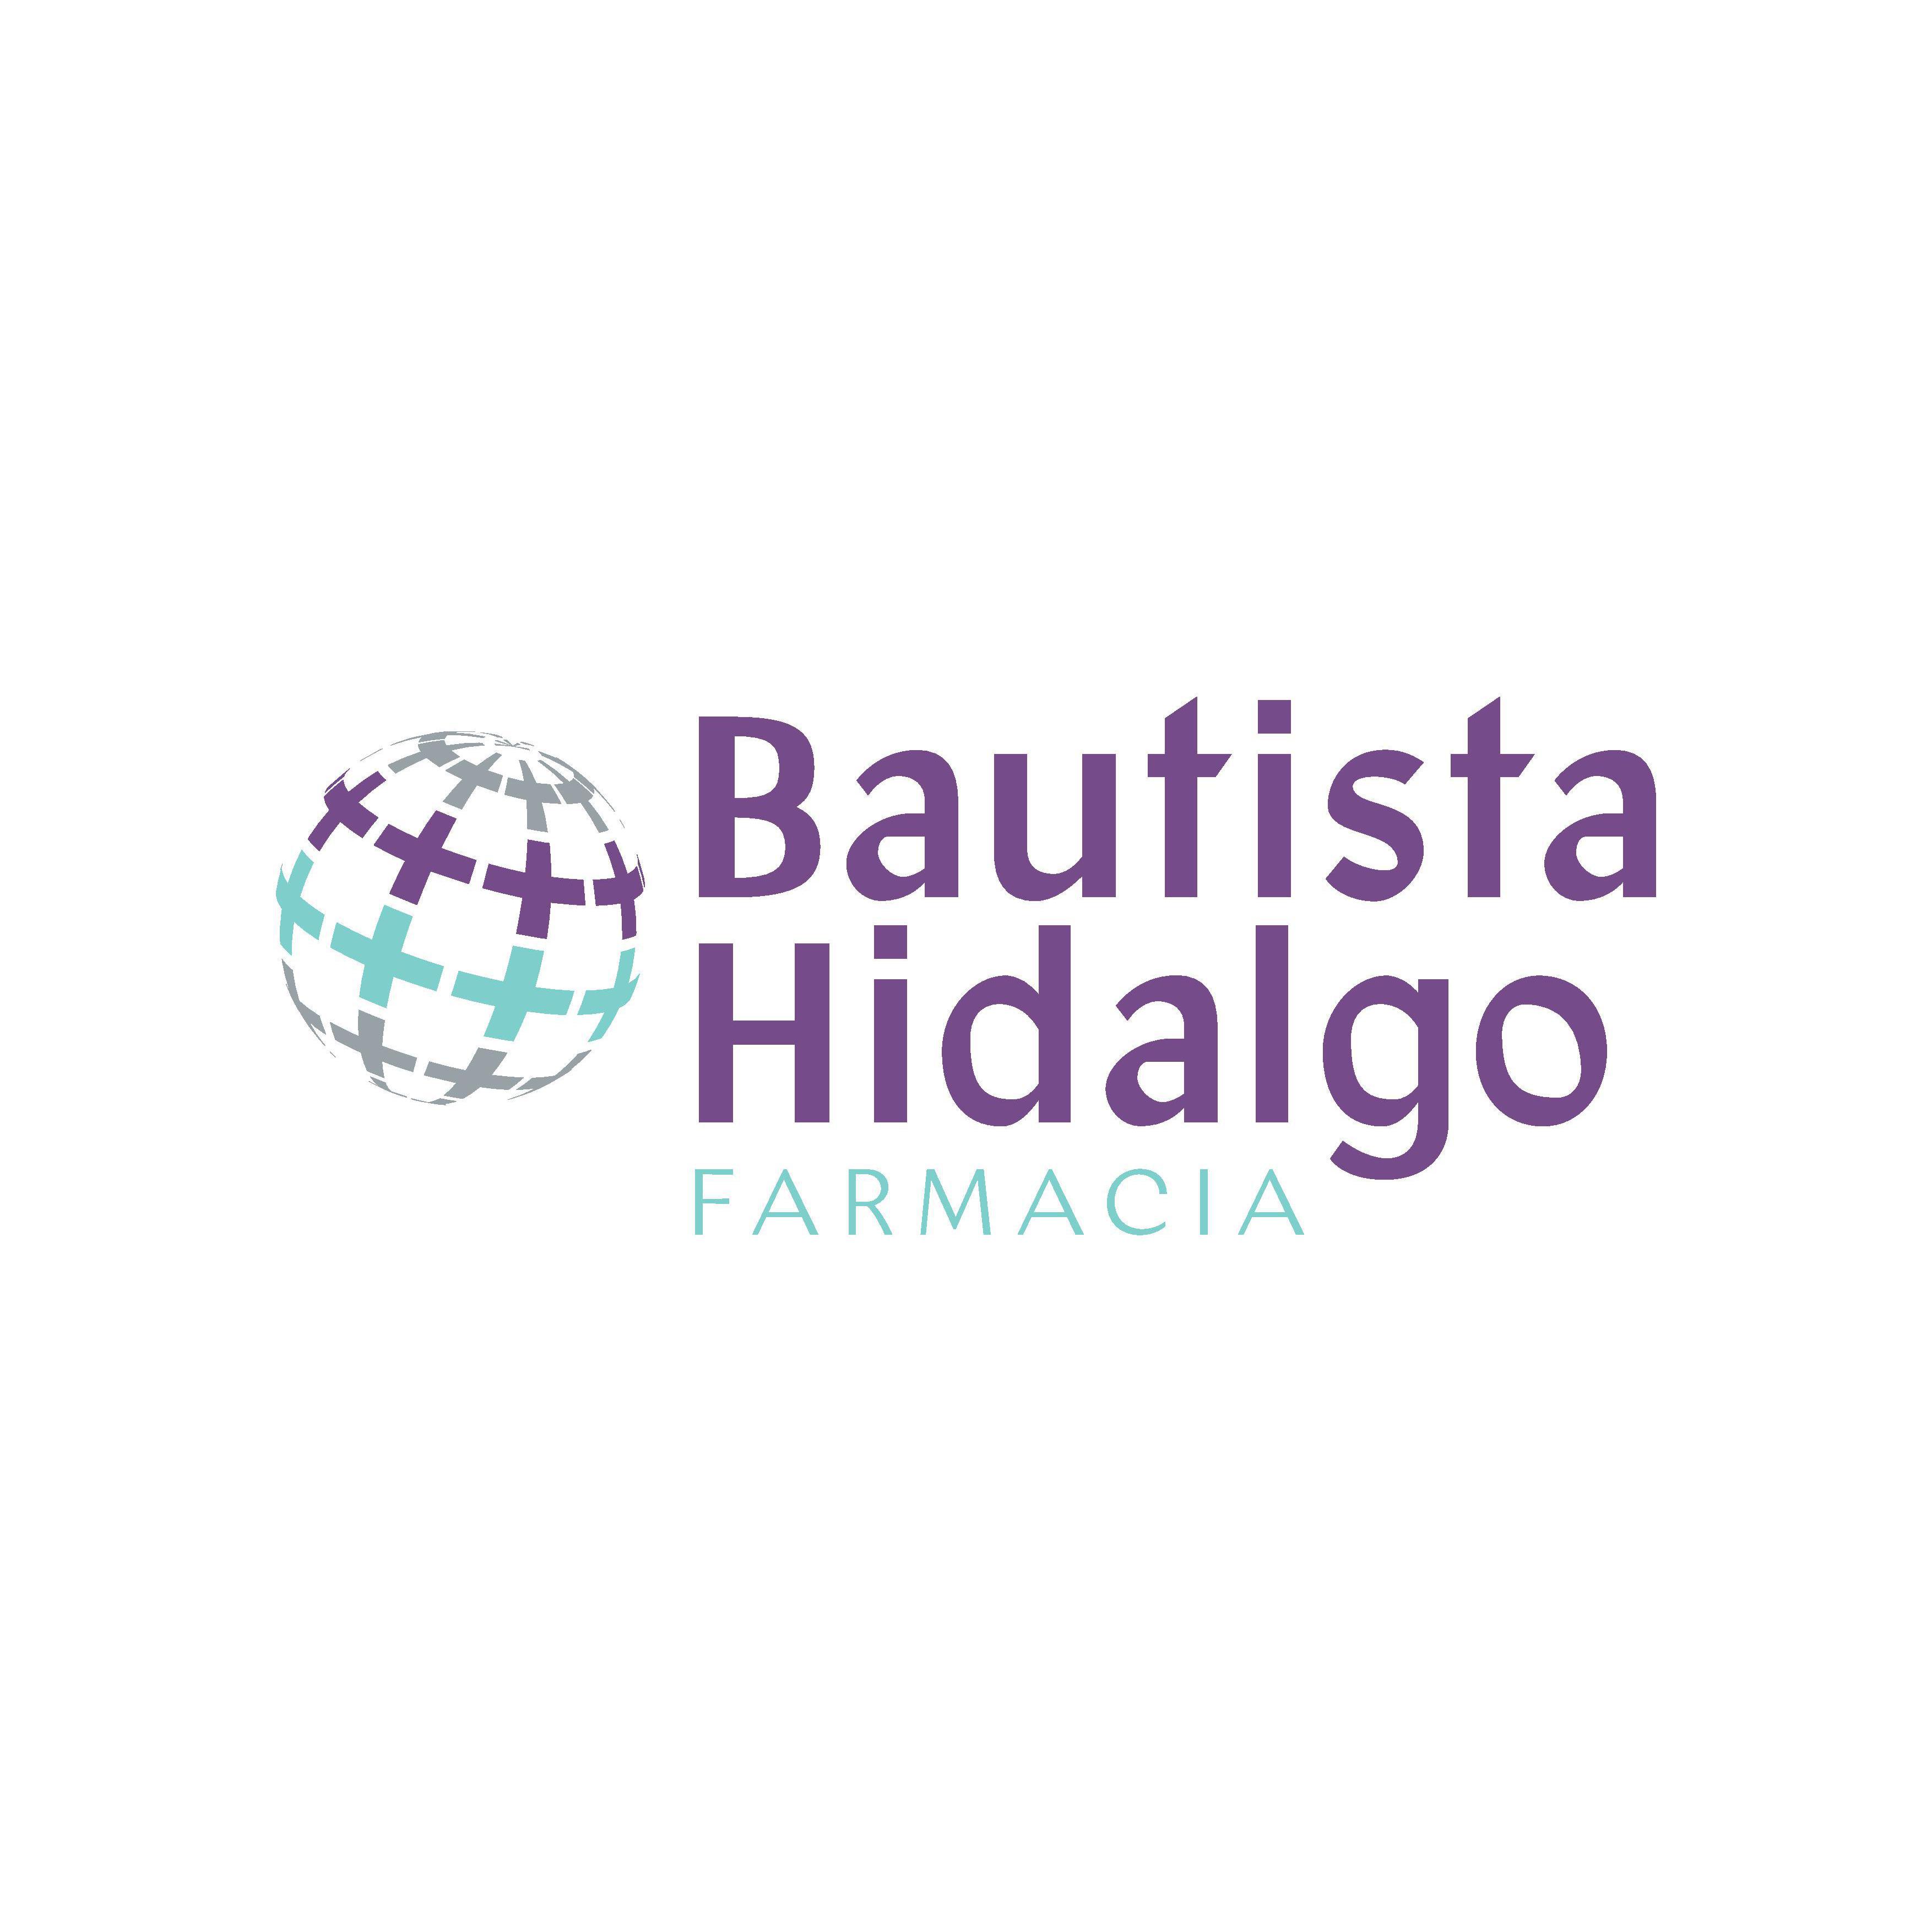 Bautista Hidalgo Farmacia Logo